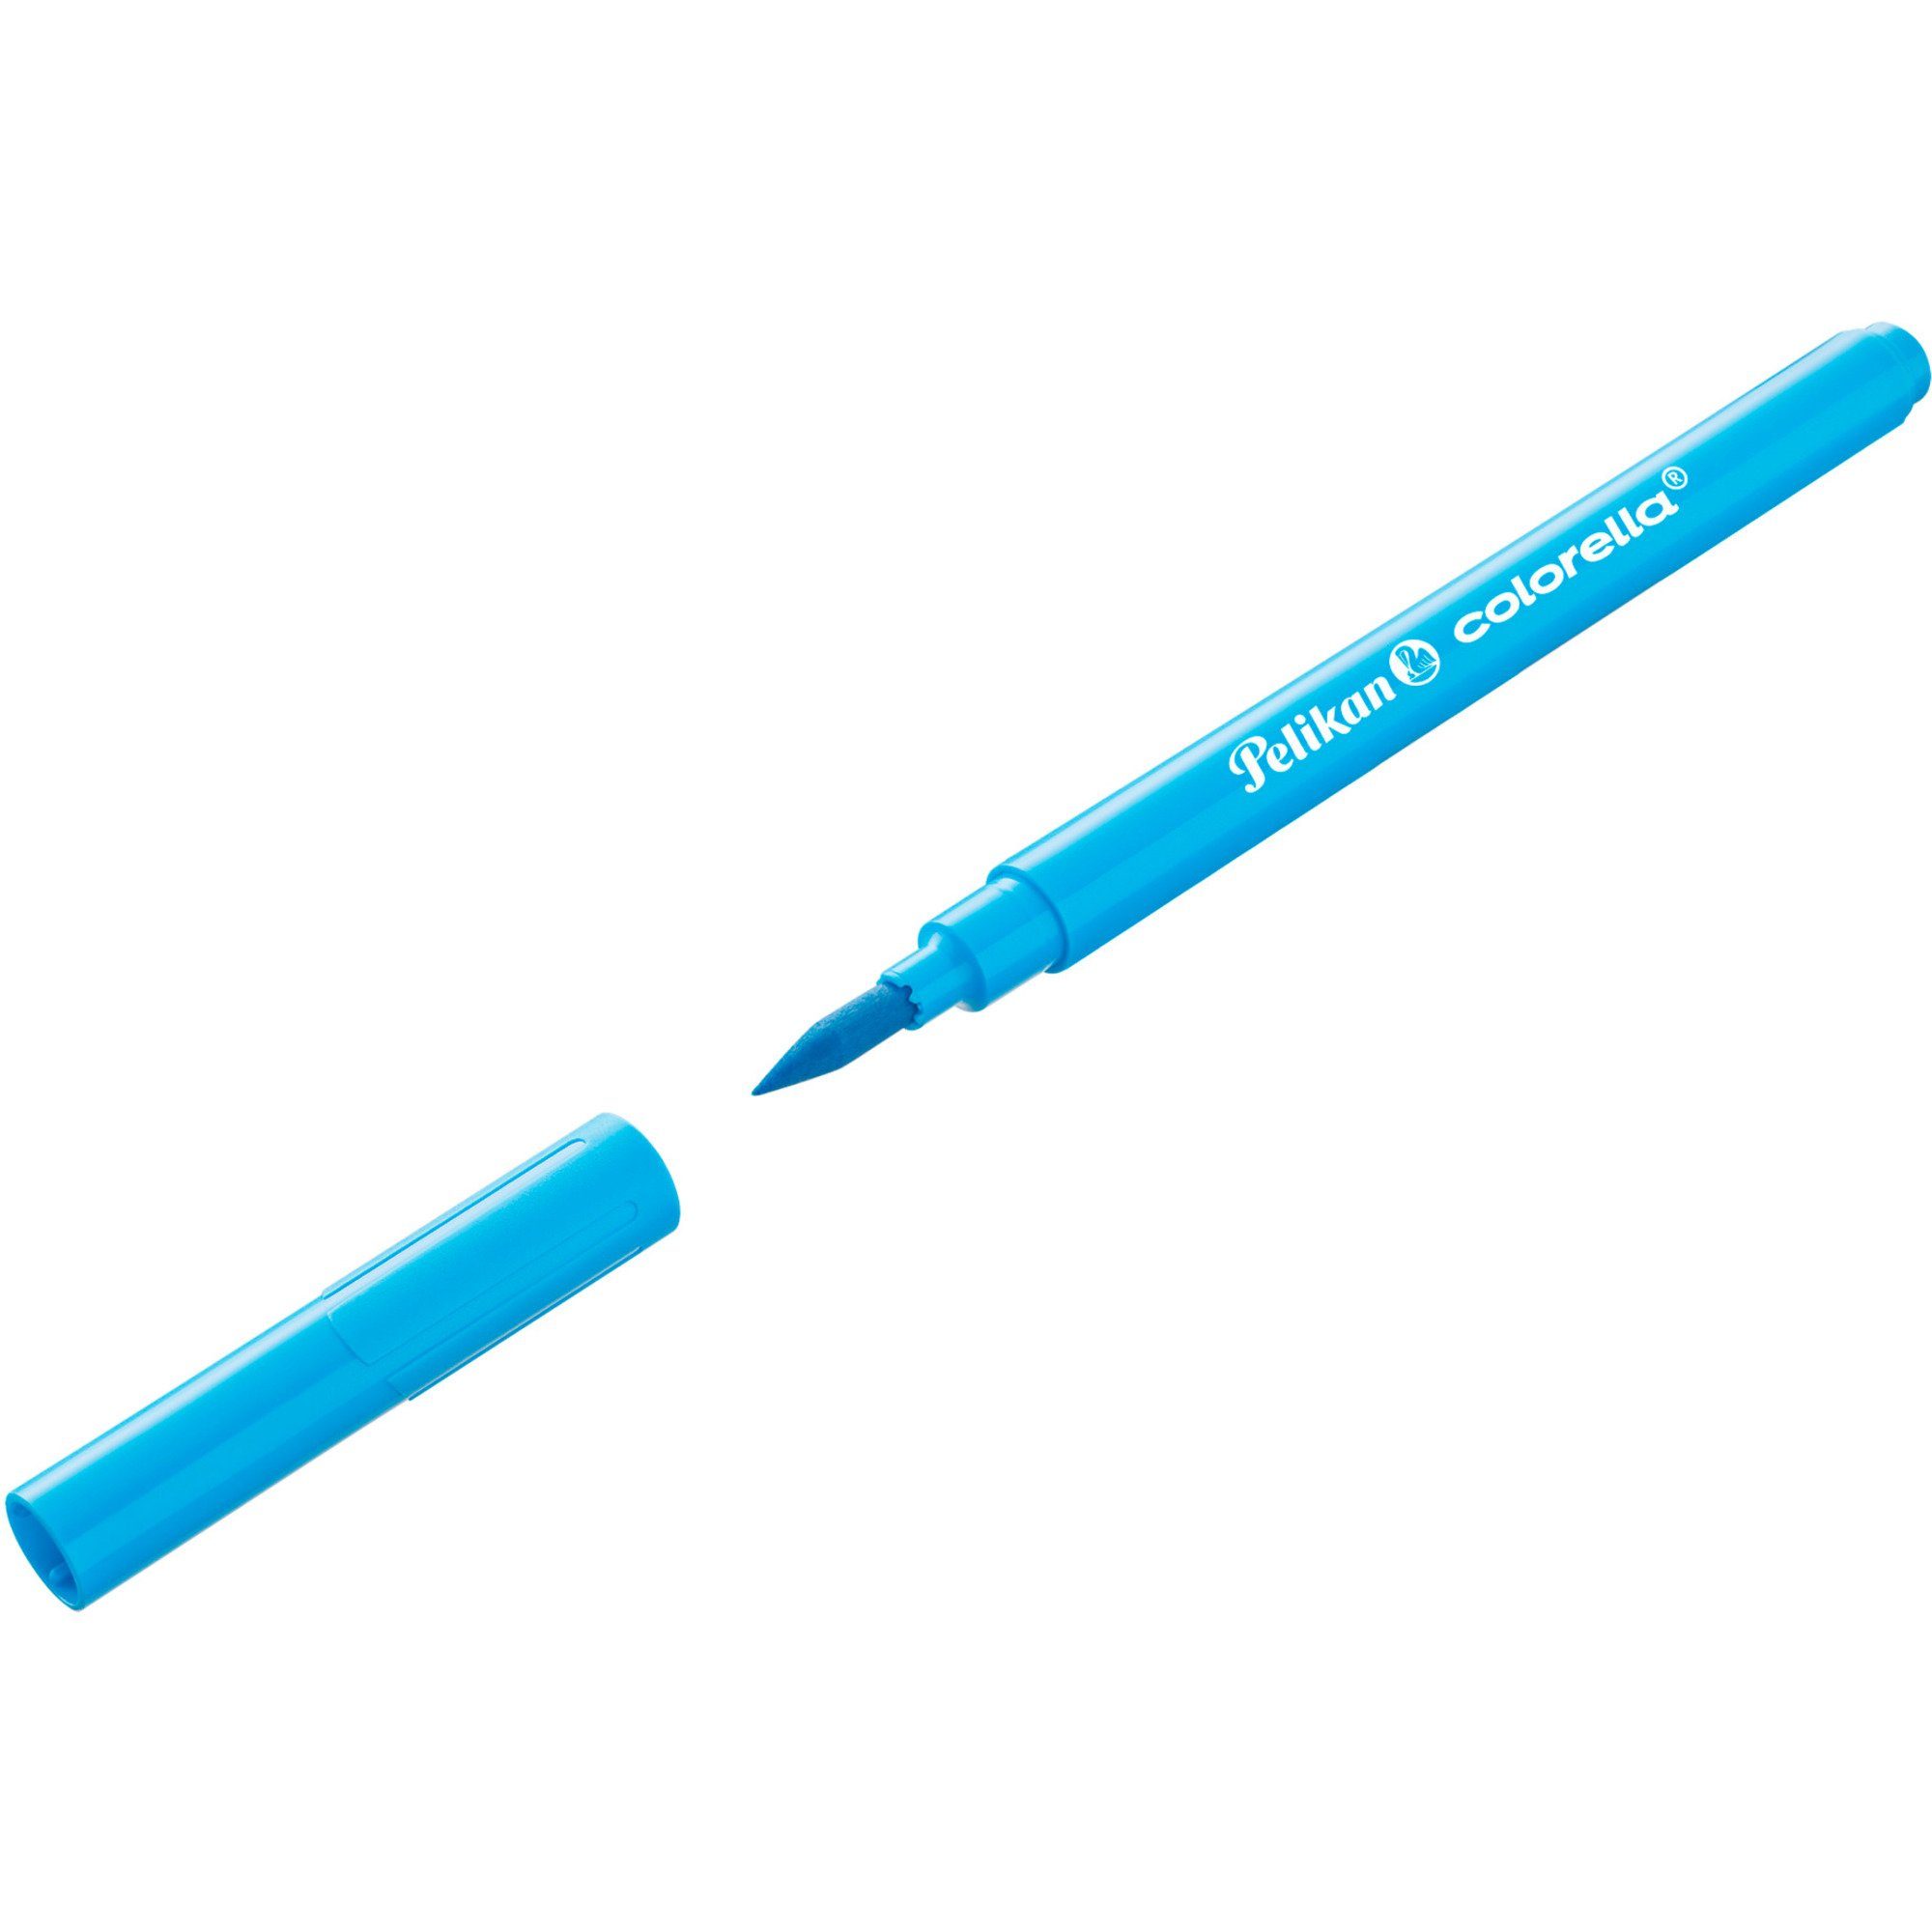 Colorella Pinselstifte, Pelikan Pelikan Druckkugelschreiber Stift